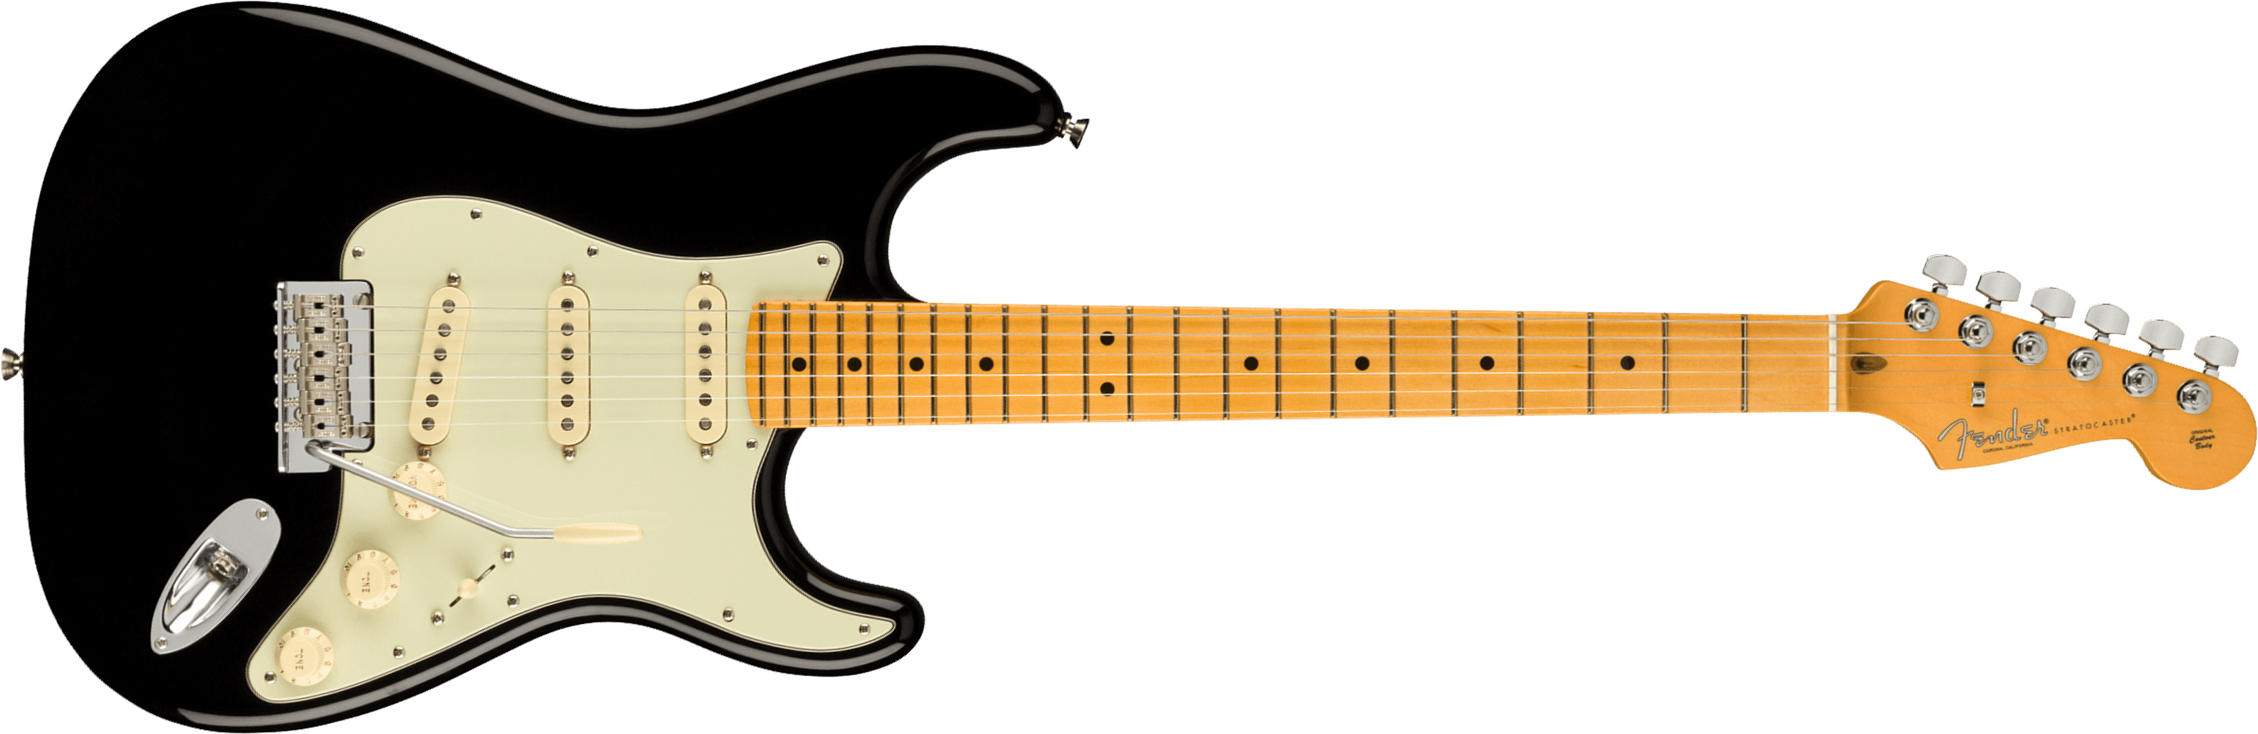 Fender Strat American Professional Ii Usa Mn - Black - Guitare Électrique Forme Str - Main picture